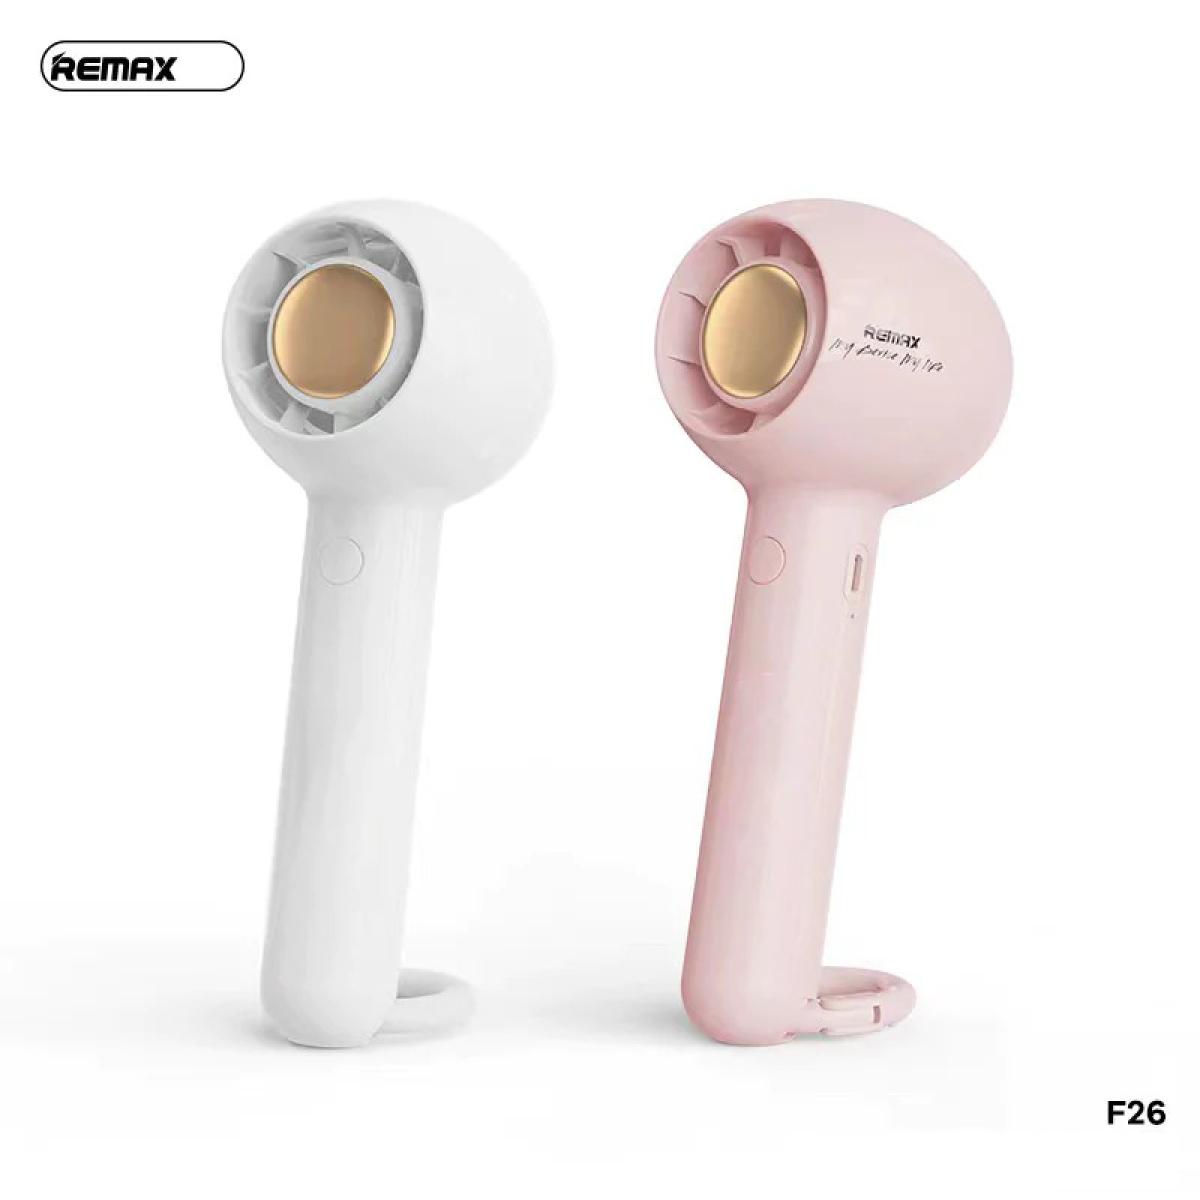 Remax F26 Portable Finlin Series Handheld Cooling Fan | F26 | CSE ...